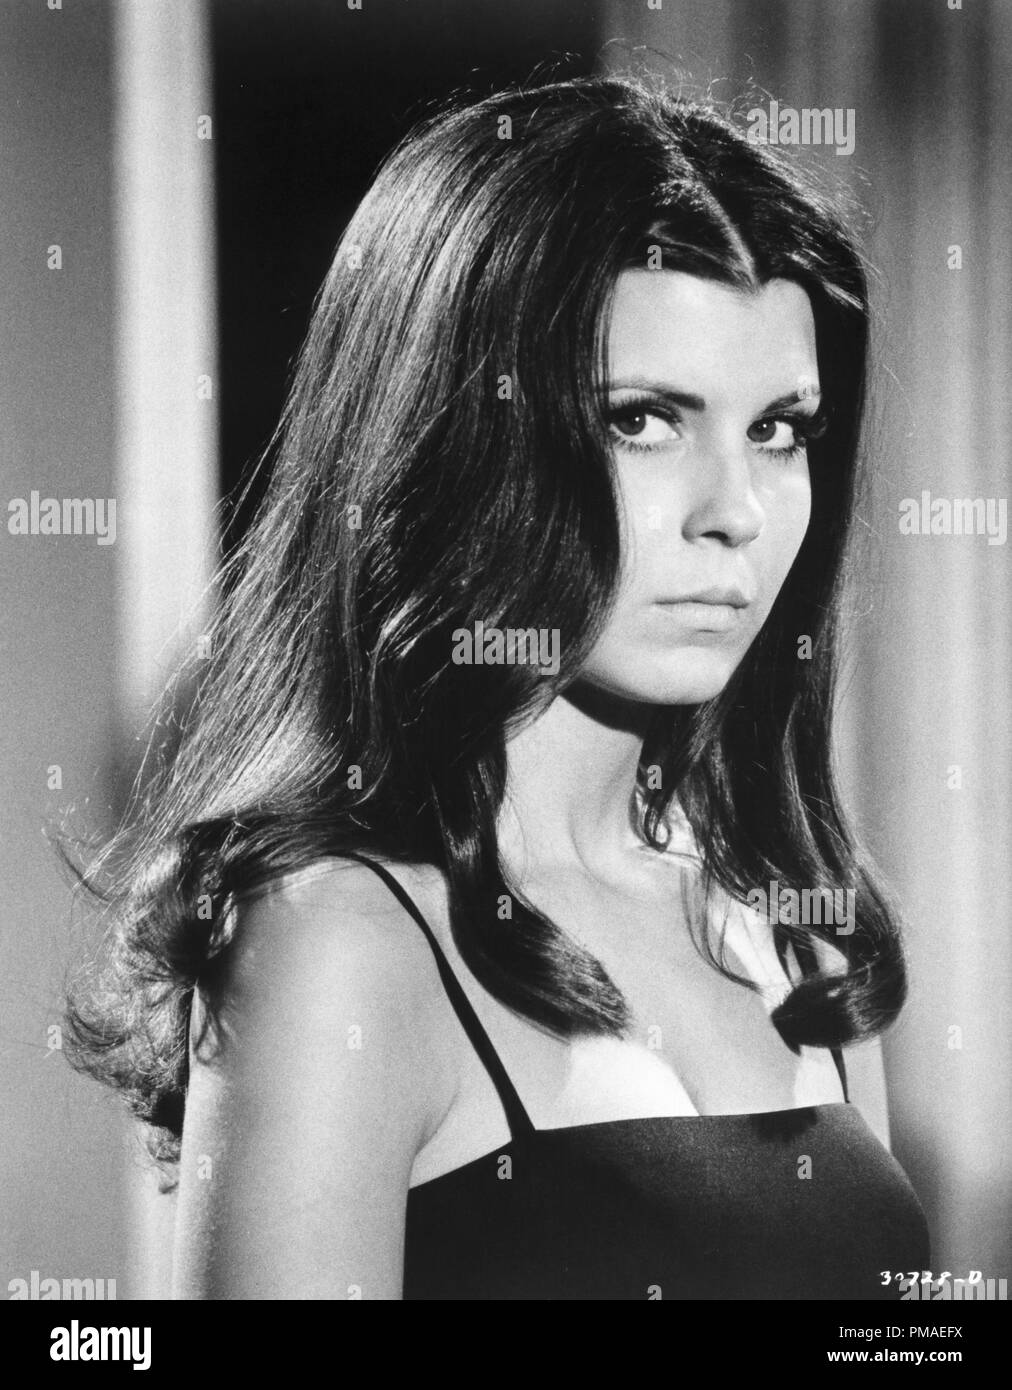 Christina Sinatra, 'It Takes A Thief', circa 1968 Universal Television/ABC  File Reference # 32509 877THA Stock Photo